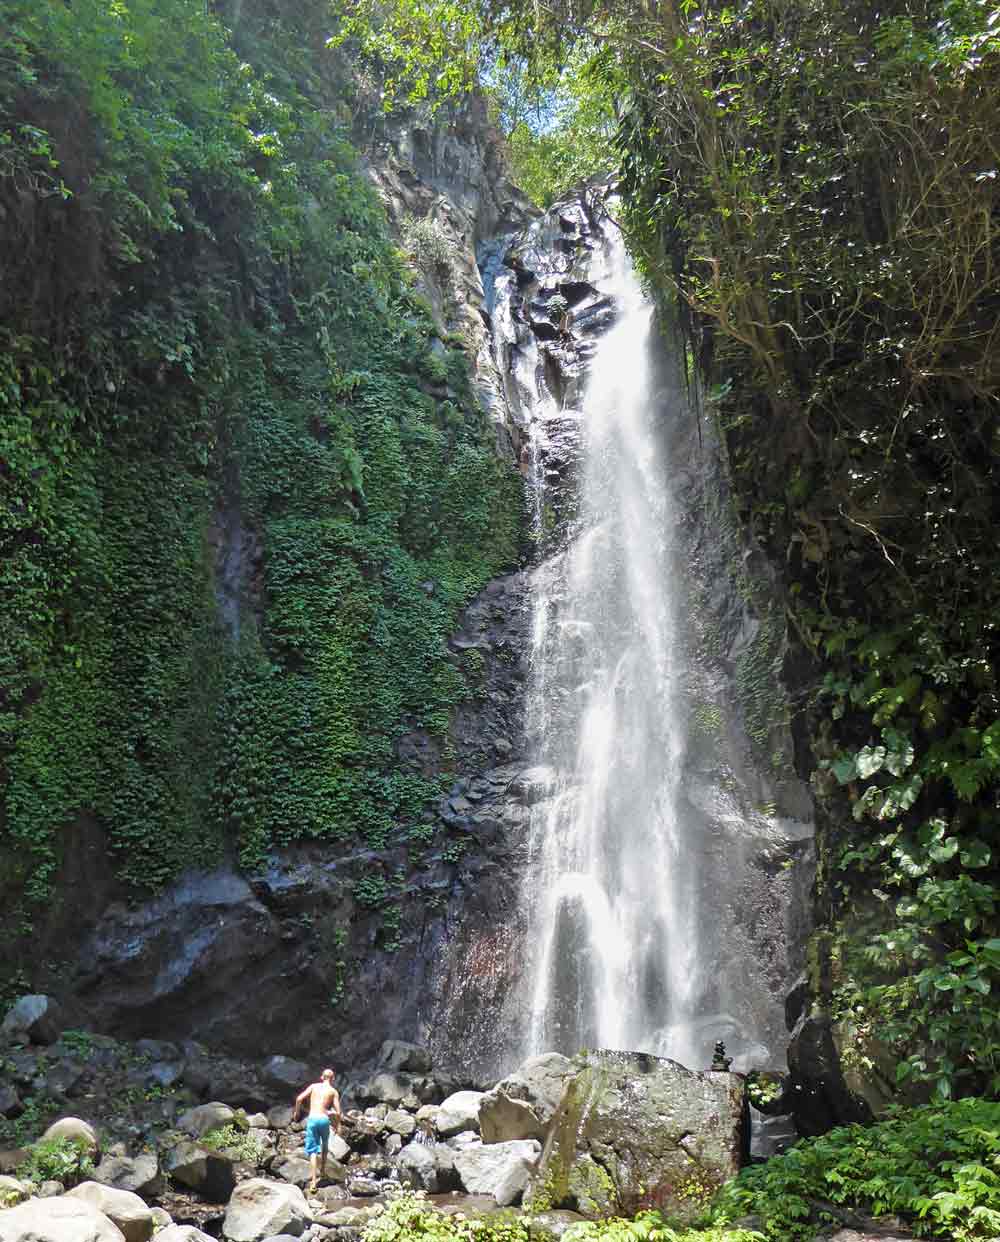 Yeh Mampeh, or Les Waterfall, located in Tejakula Bali